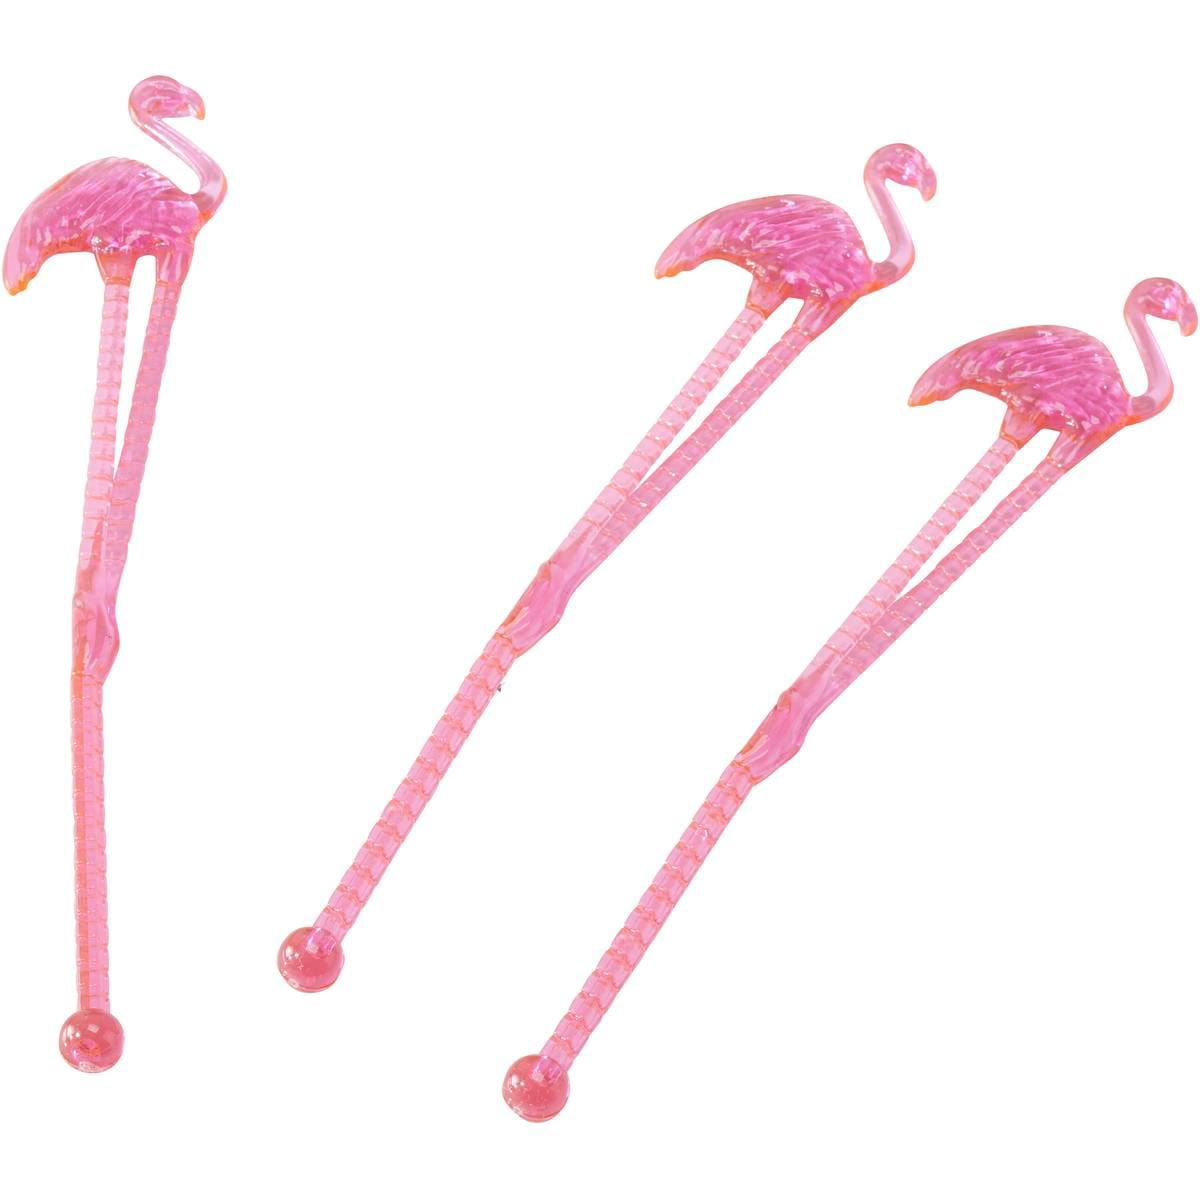 24 48 72 96 Flamingo Plastic Picks BBQ Han Party Cocktail Drinks Stirr